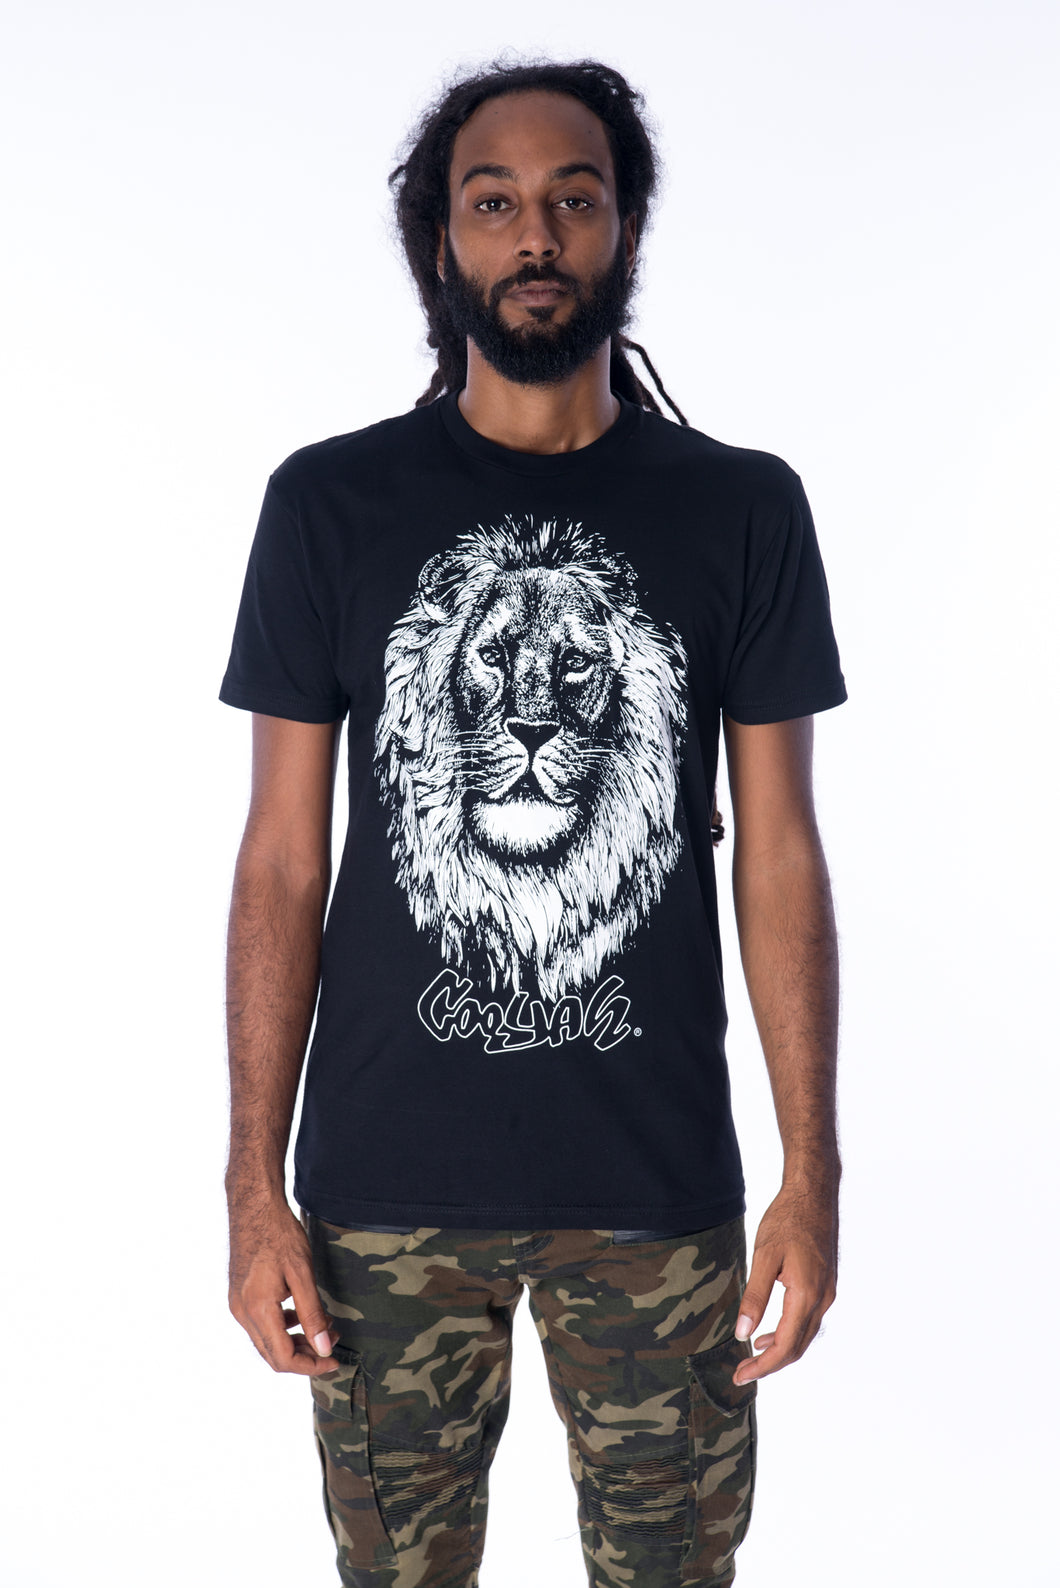 Men’s T-Shirt with Big Face Lion Graphic